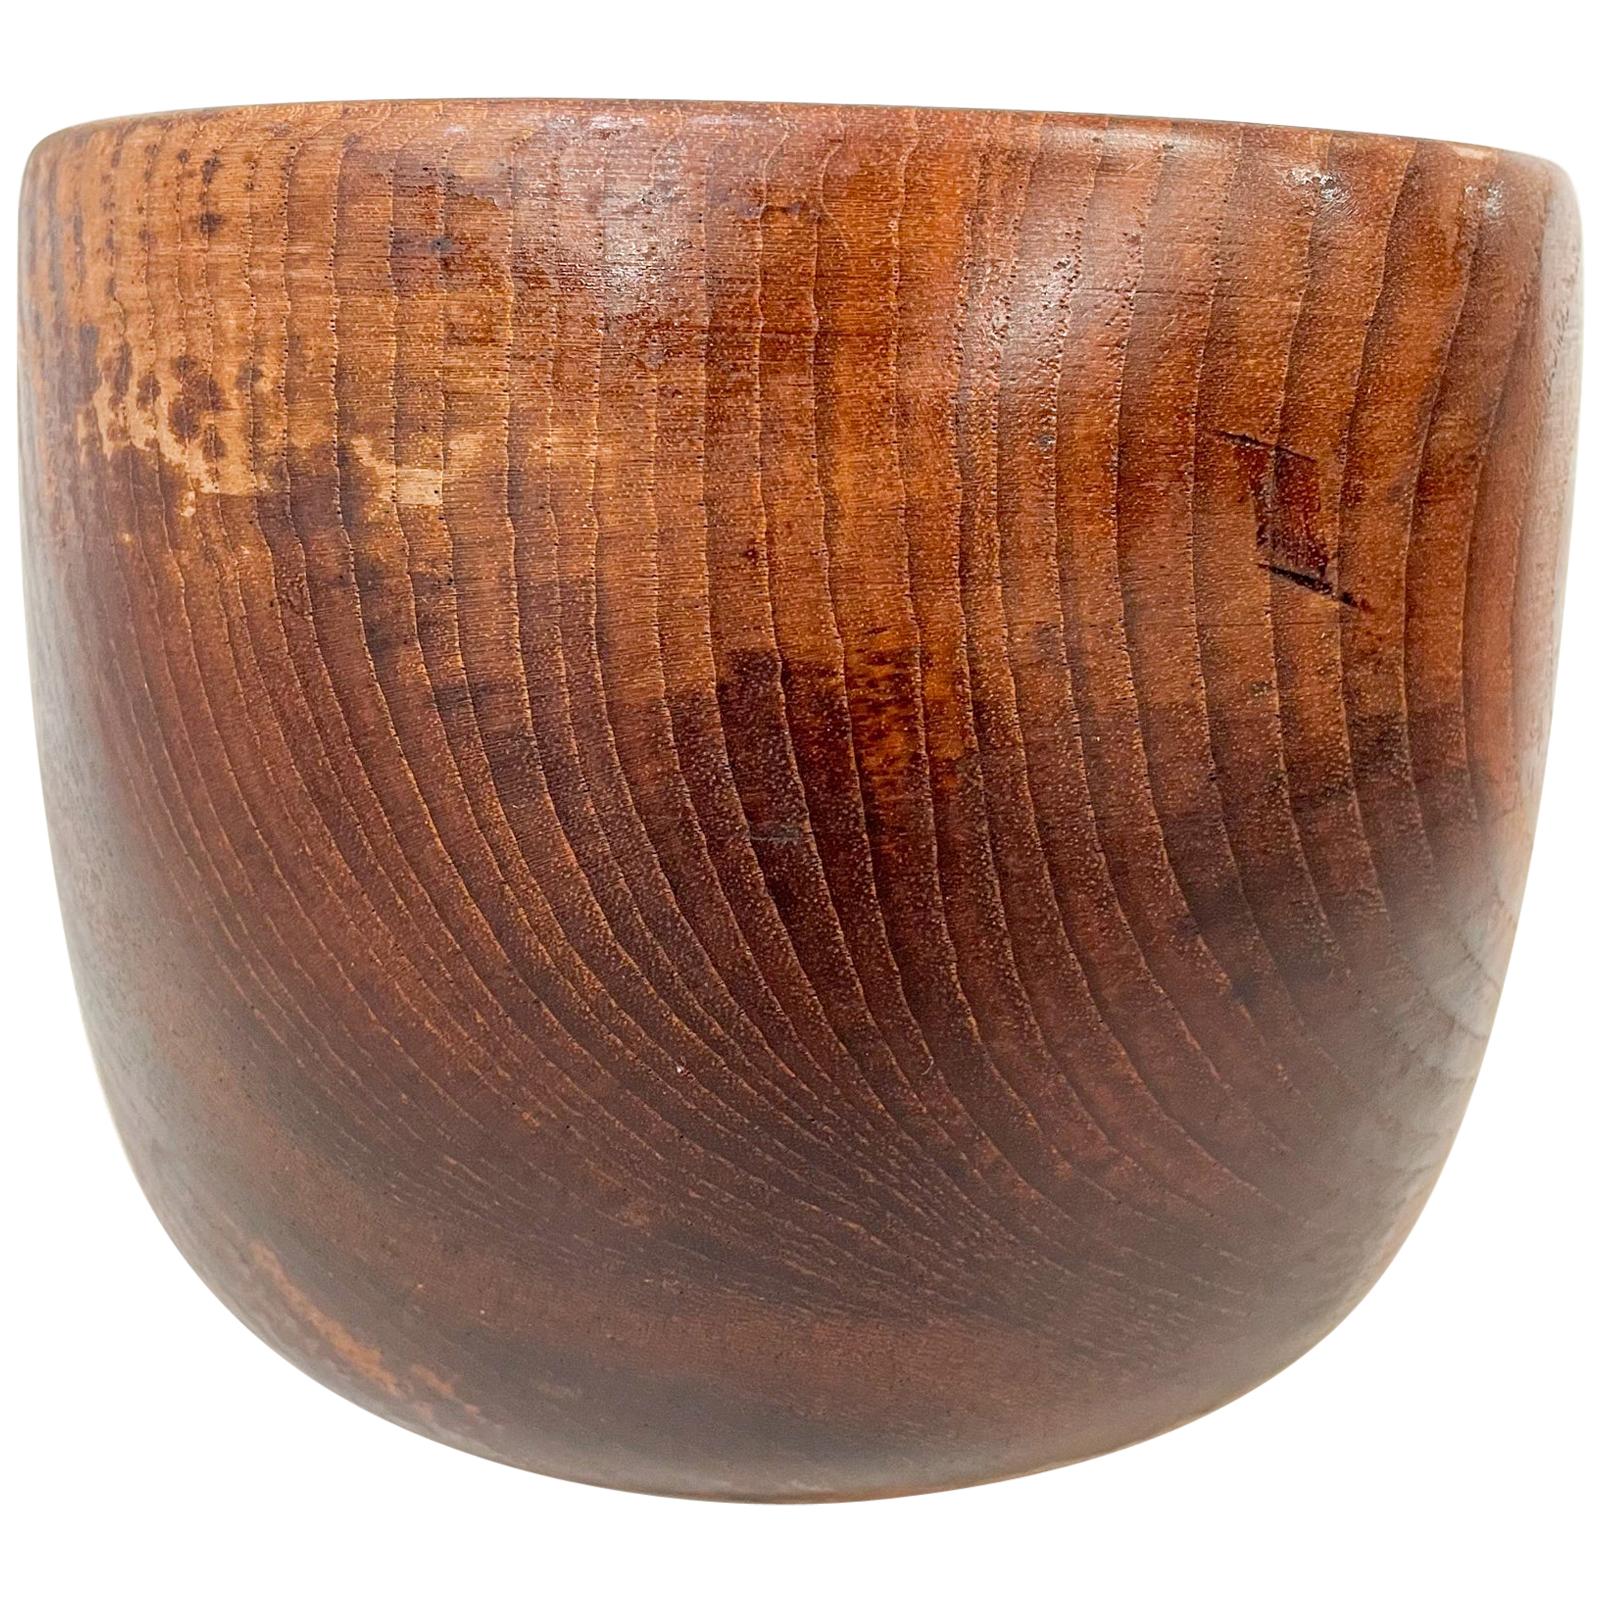 Solid Teak Wood Bowl Made in Sweden Sculptural Danish Scandinavian Modern